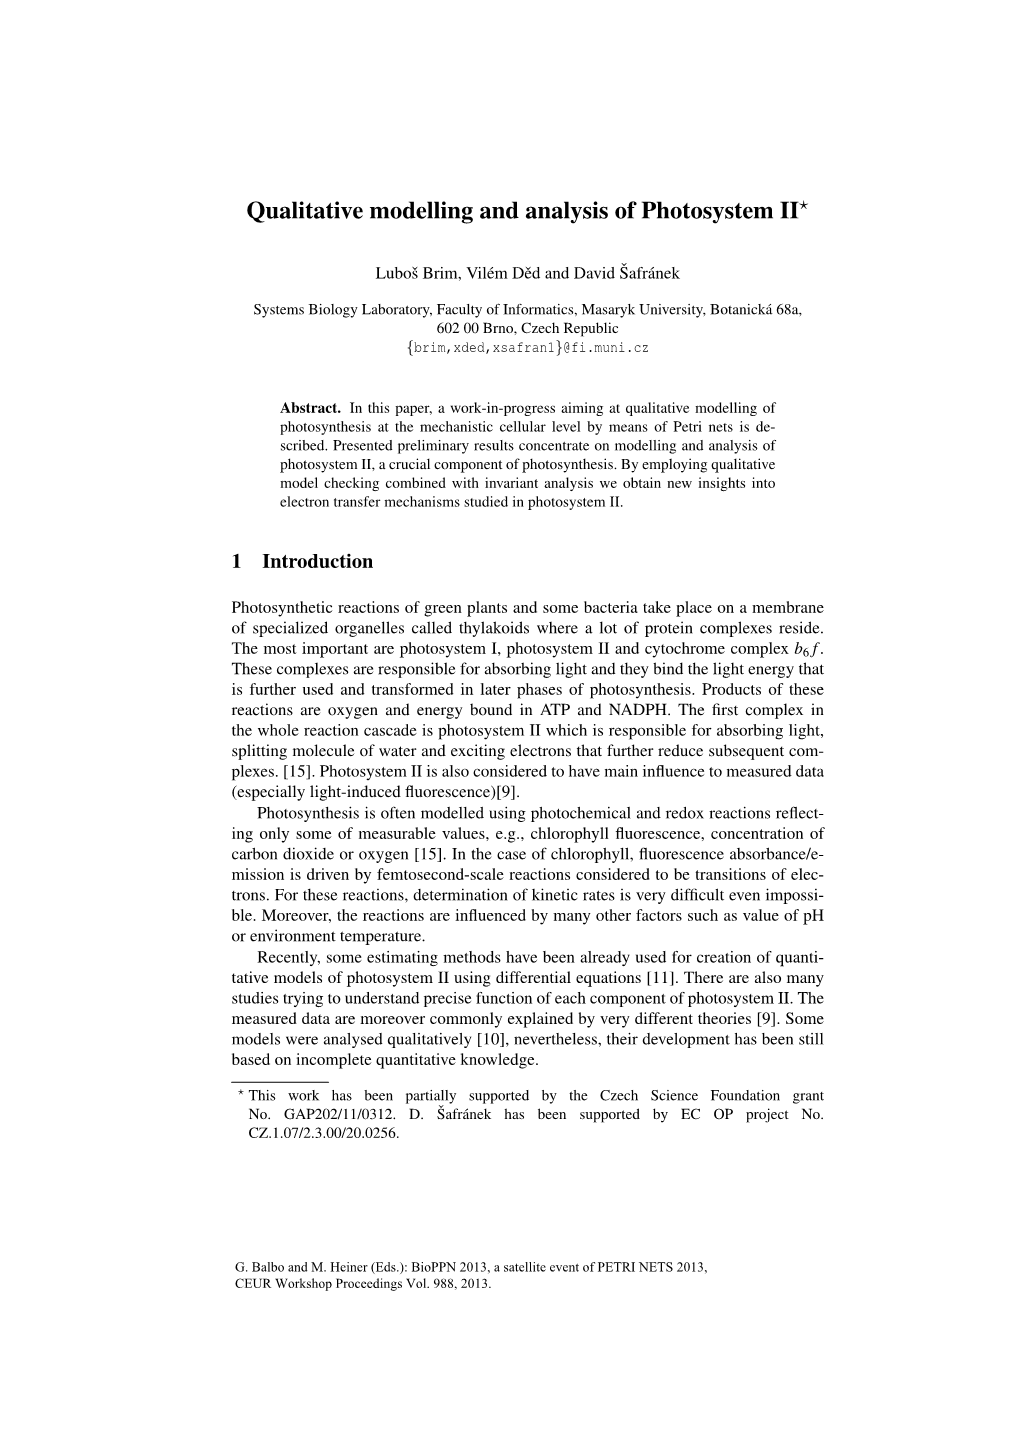 Qualitative Modelling and Analysis of Photosystem II?